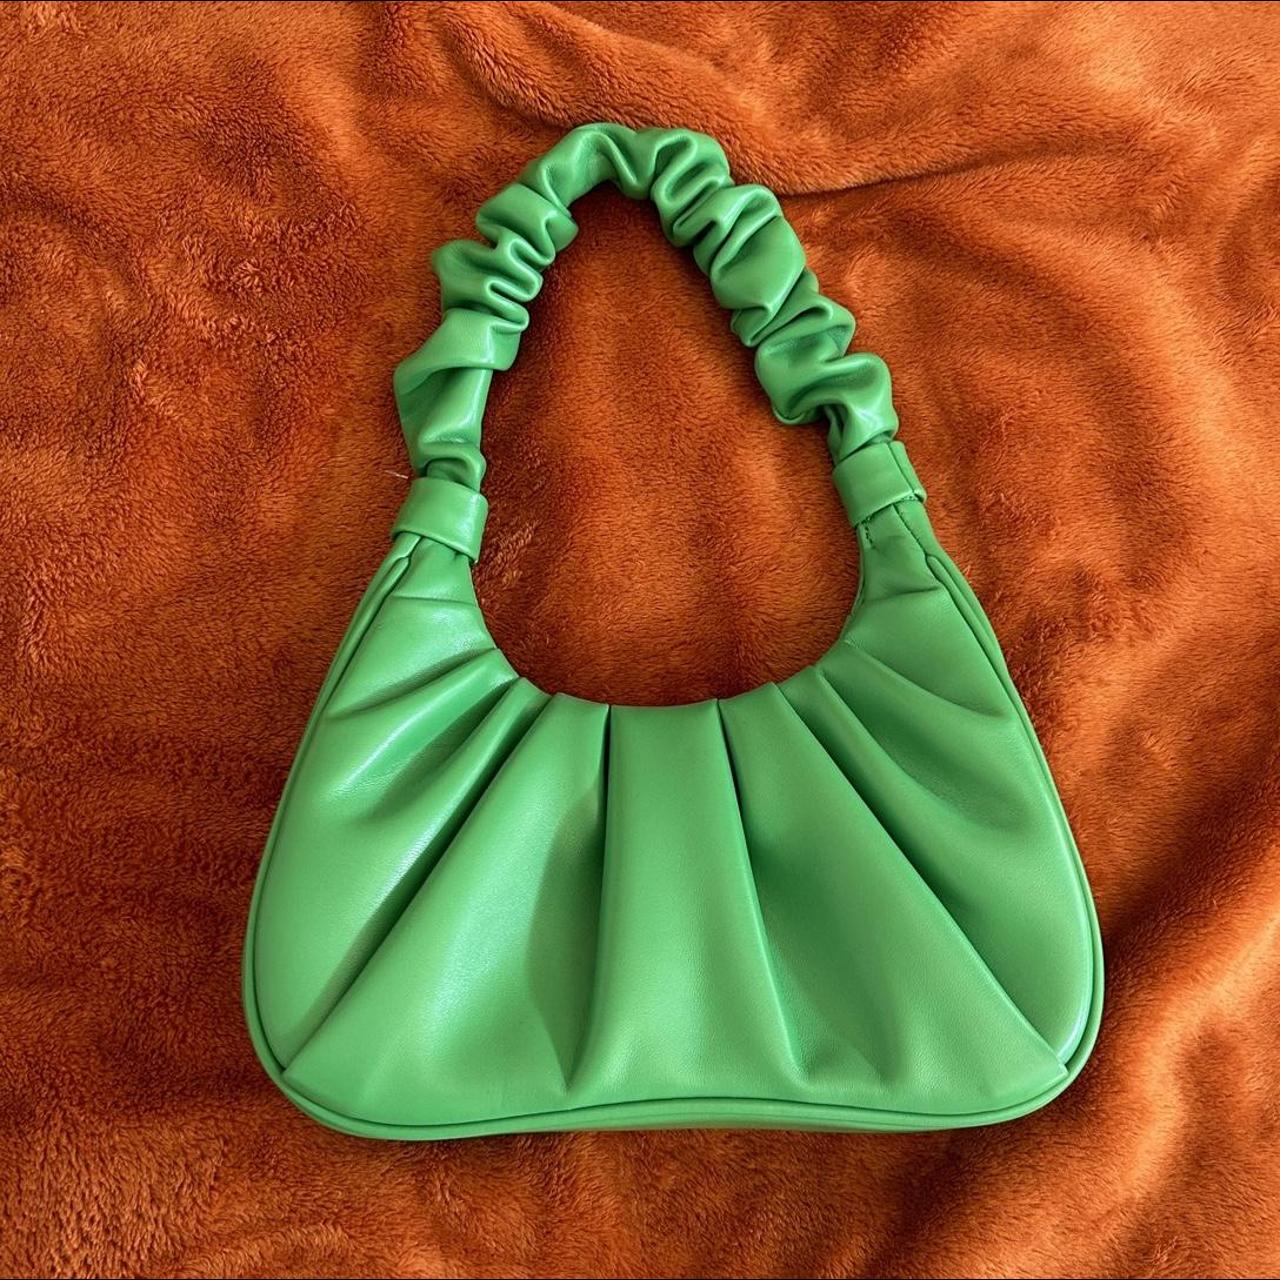 JW Pei Gabbi Ruched Hobo Handbag in Green. Never - Depop